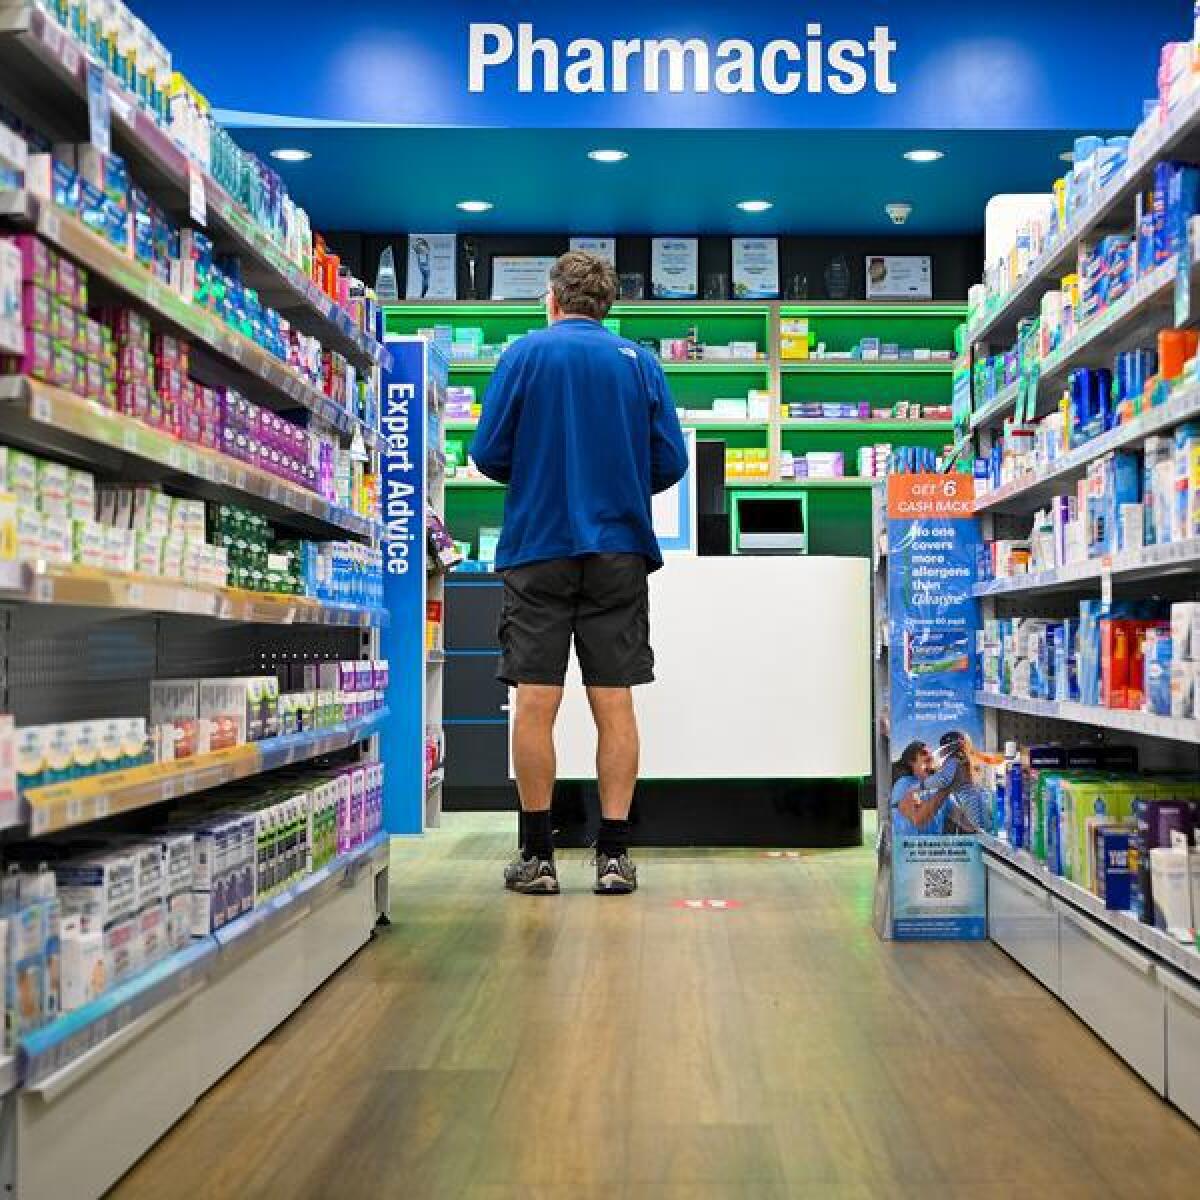 A customer waits at a pharmacy counter (file image)